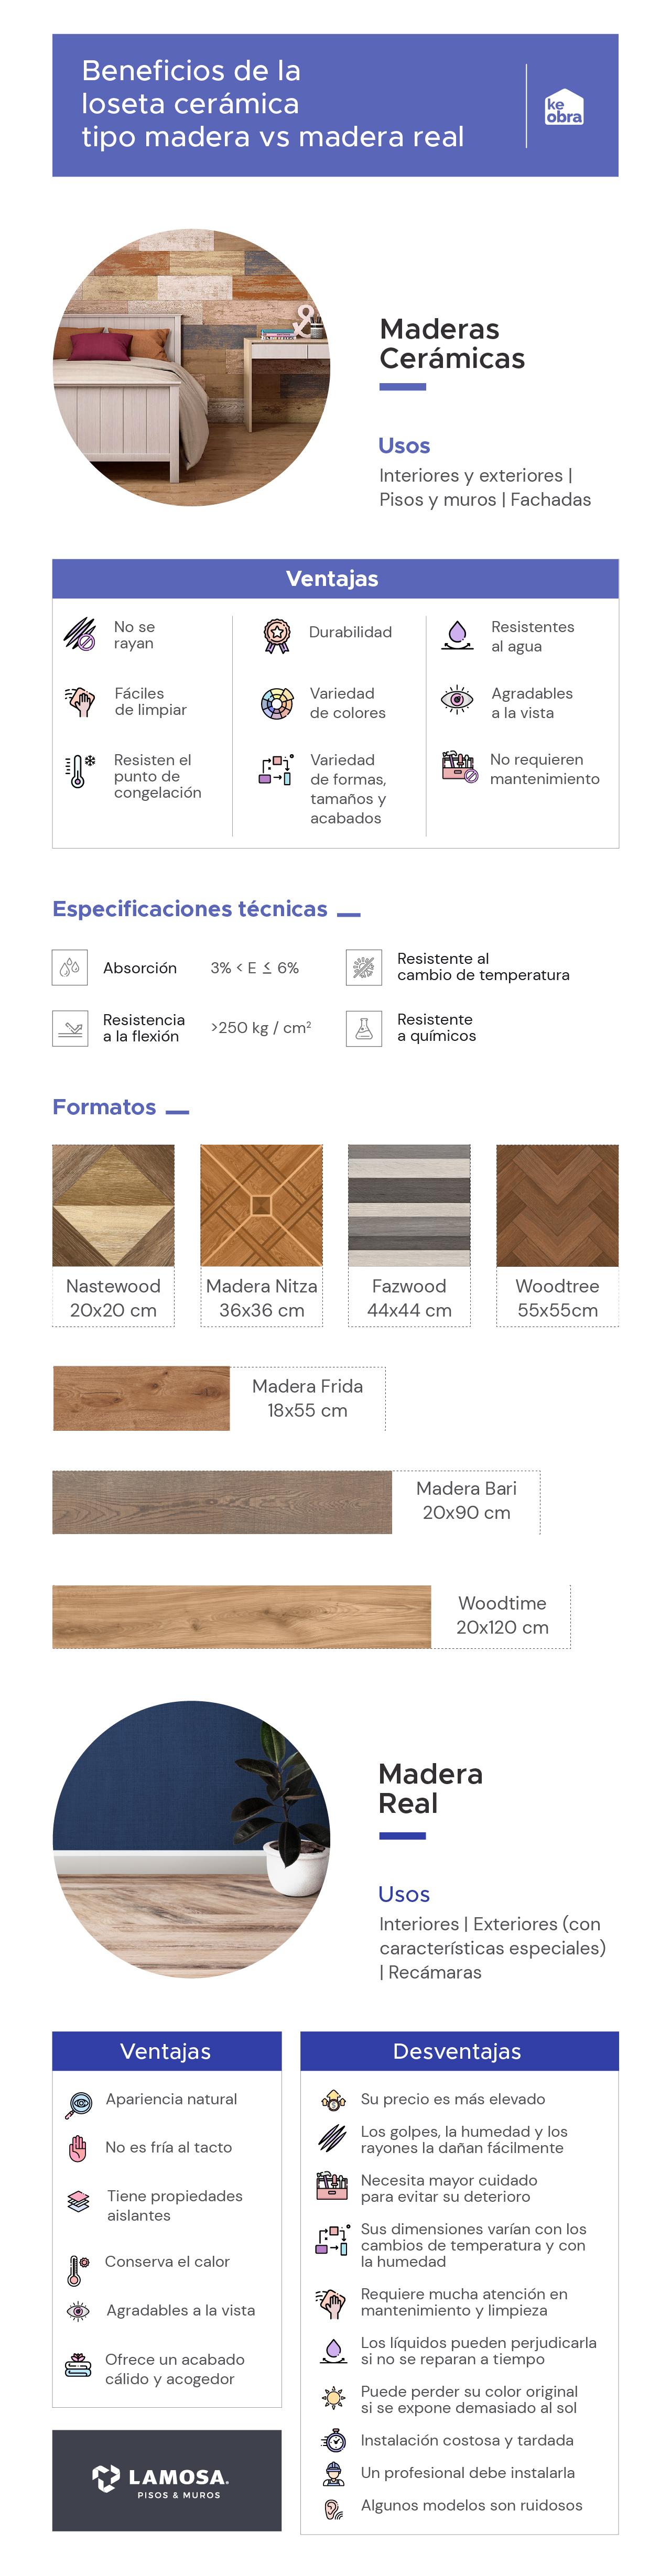 Beneficios de la loseta cerámica tipo madera de Lamosa vs. pisos de madera natural